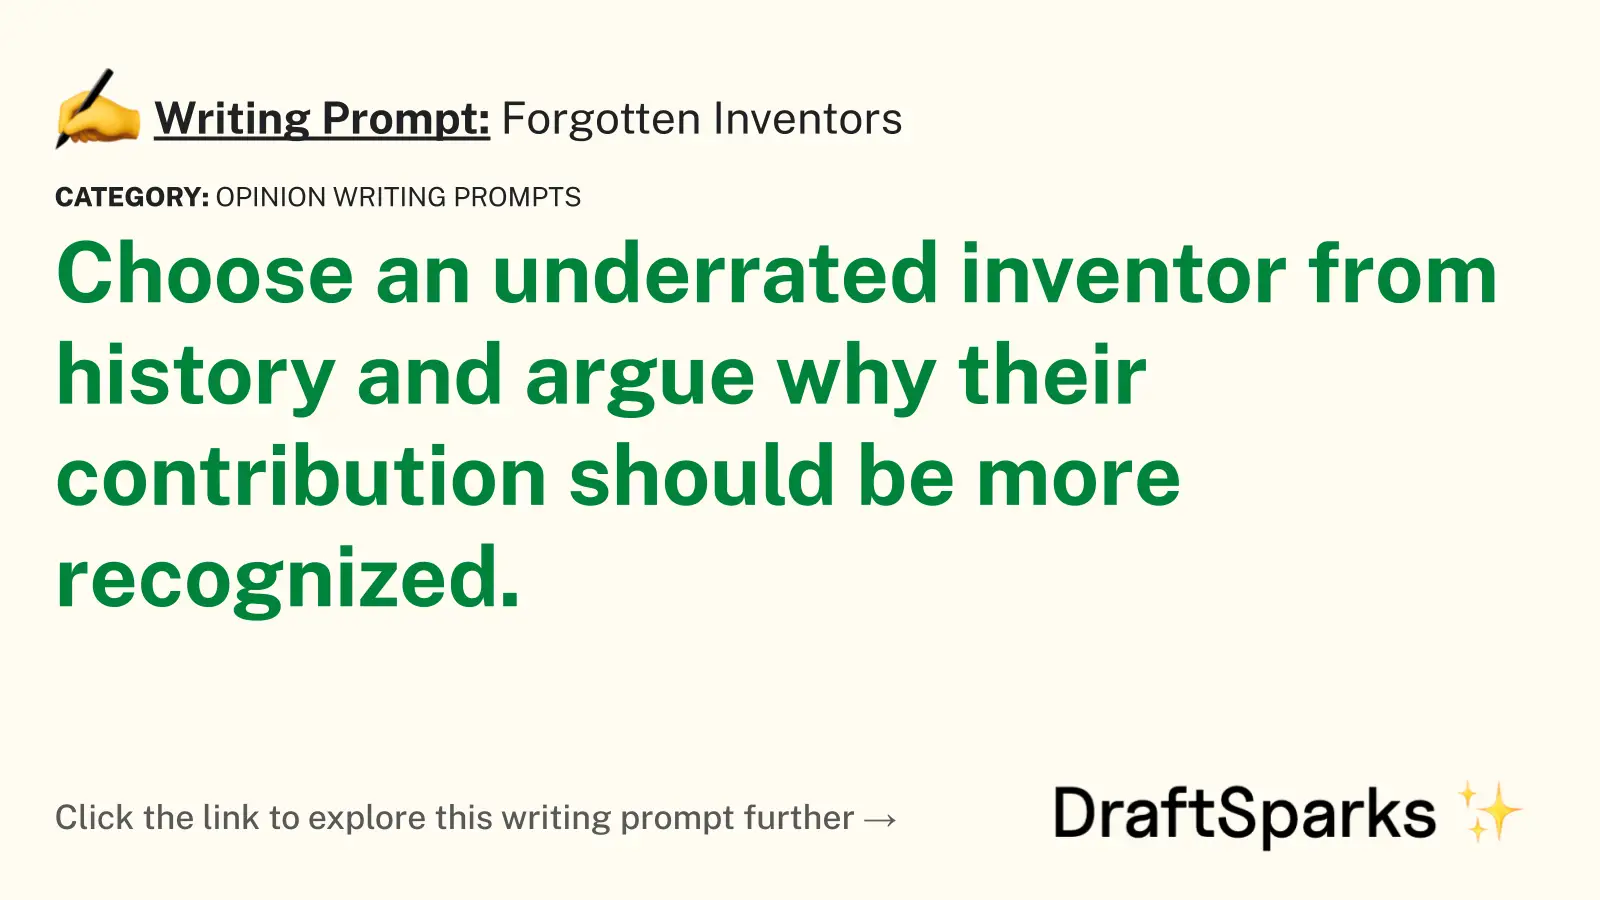 Forgotten Inventors